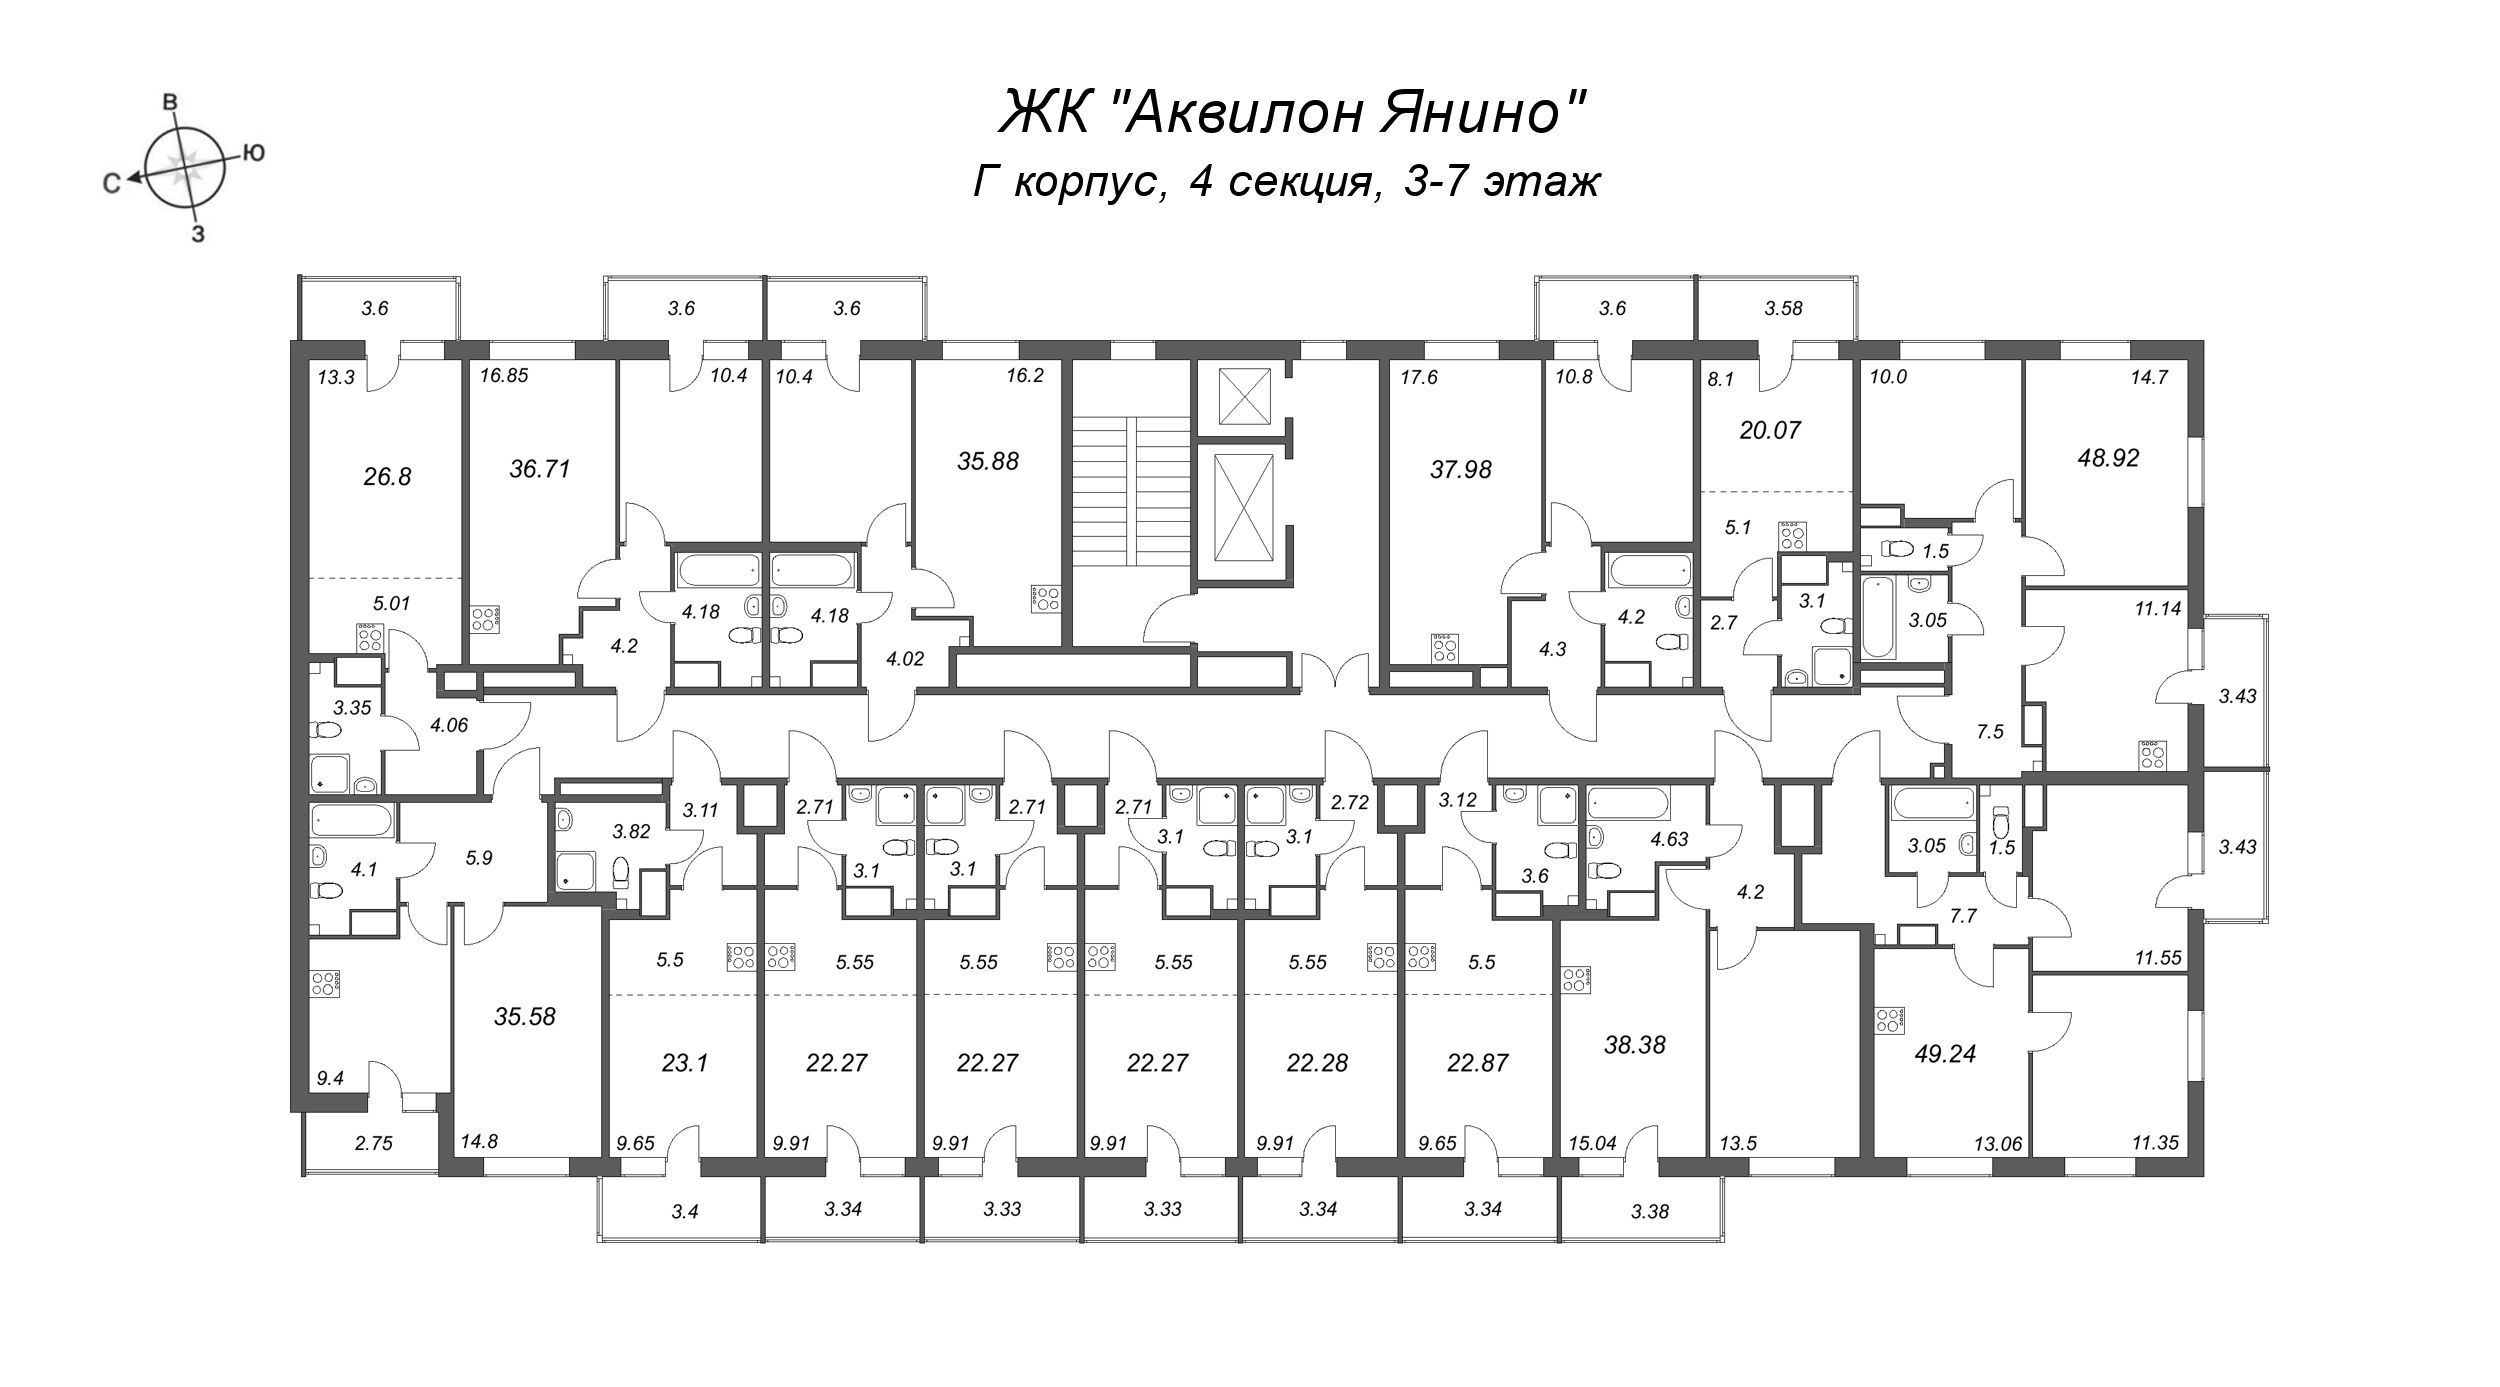 2-комнатная (Евро) квартира, 36.71 м² - планировка этажа